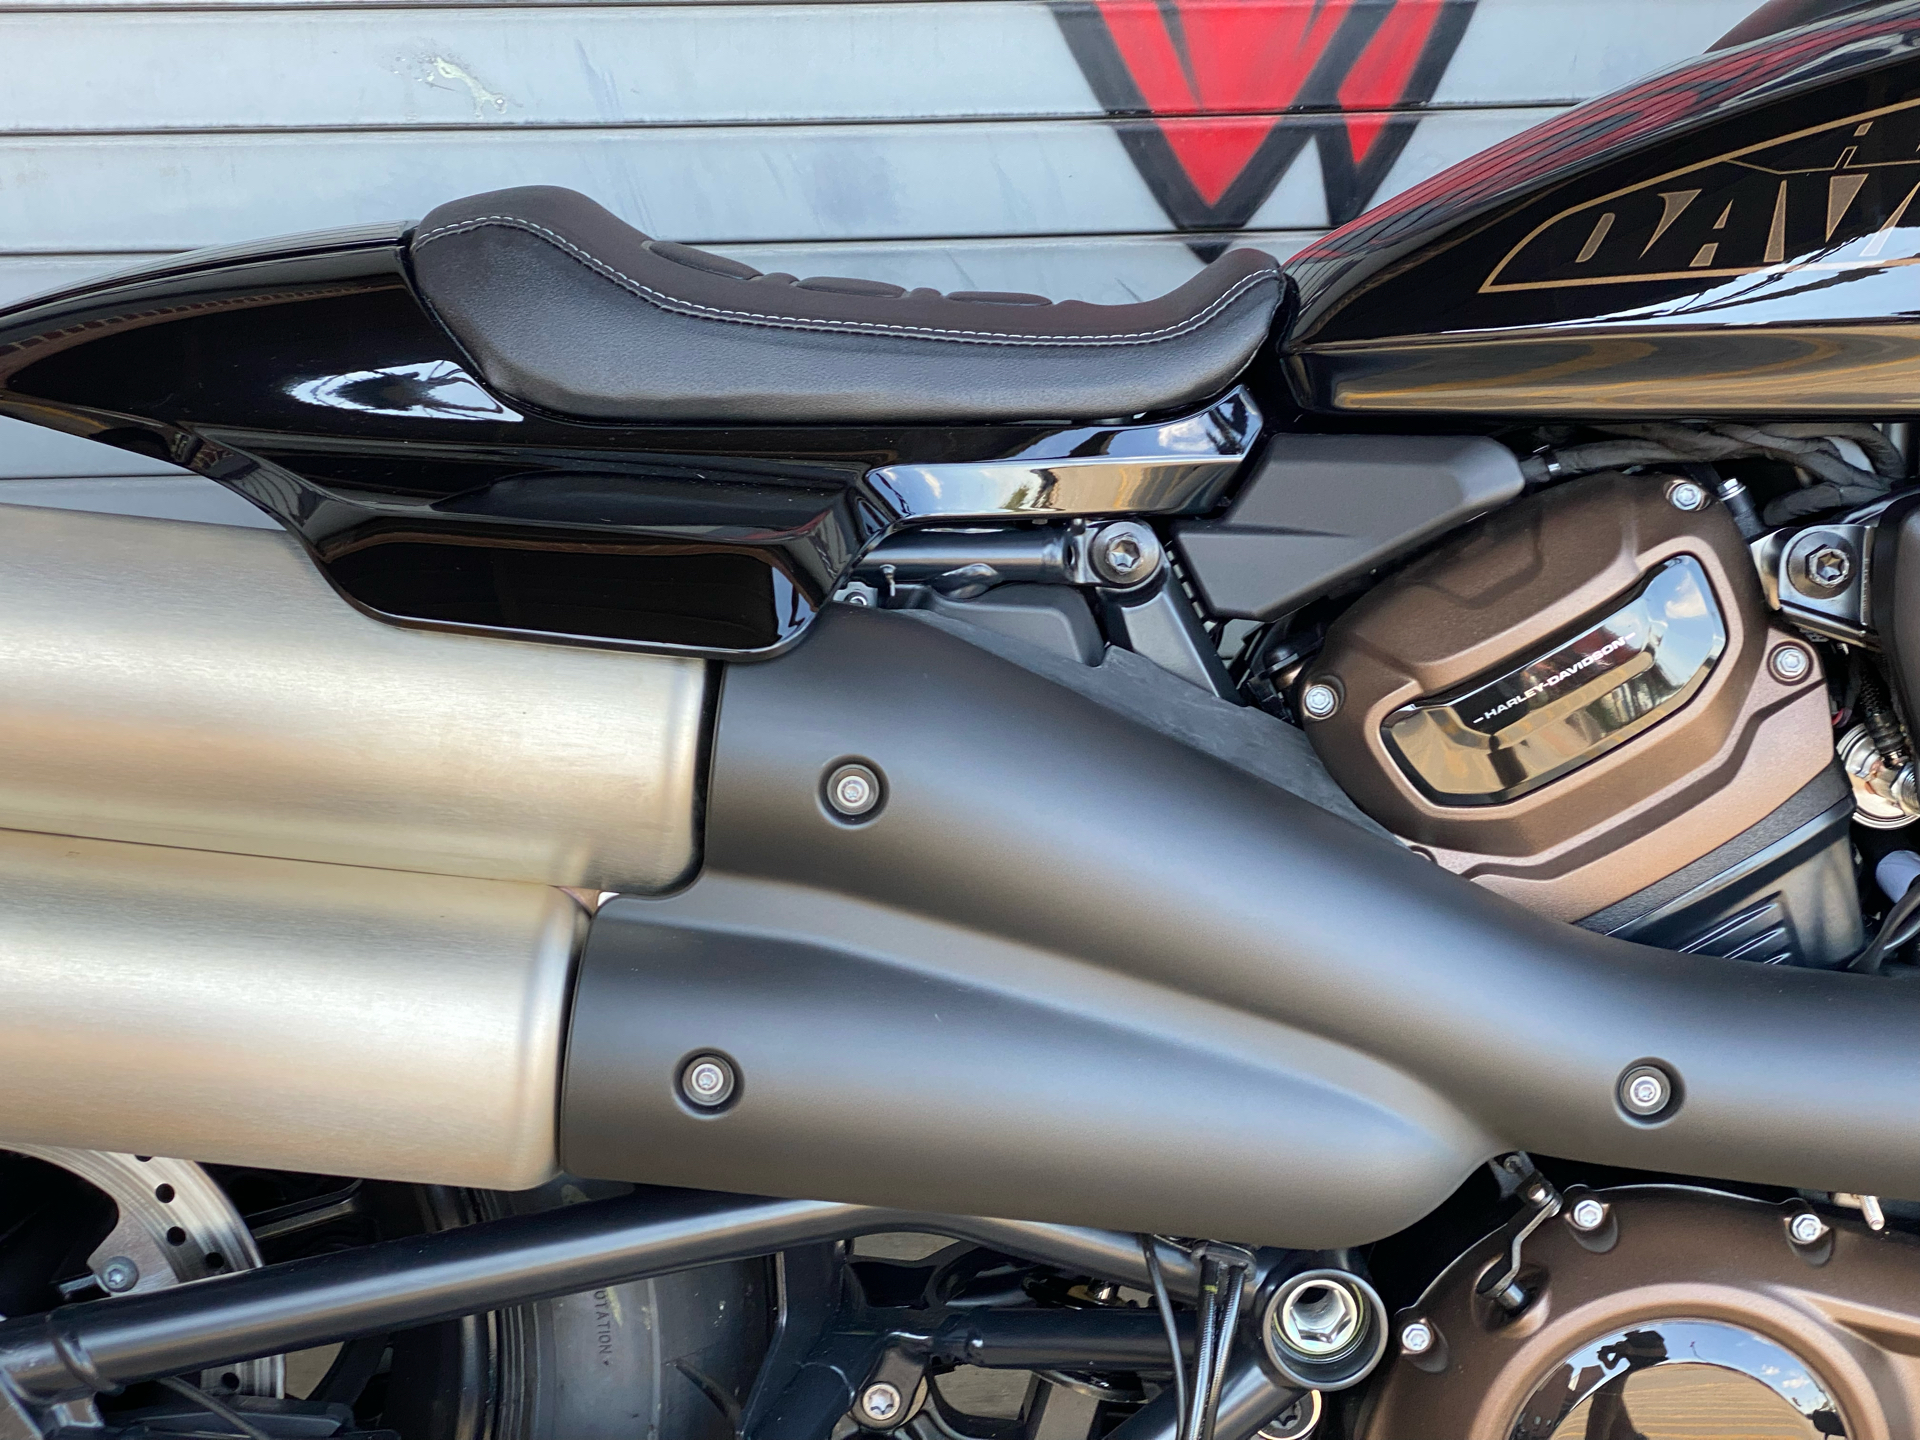 2022 Harley-Davidson Sportster® S in Carrollton, Texas - Photo 7